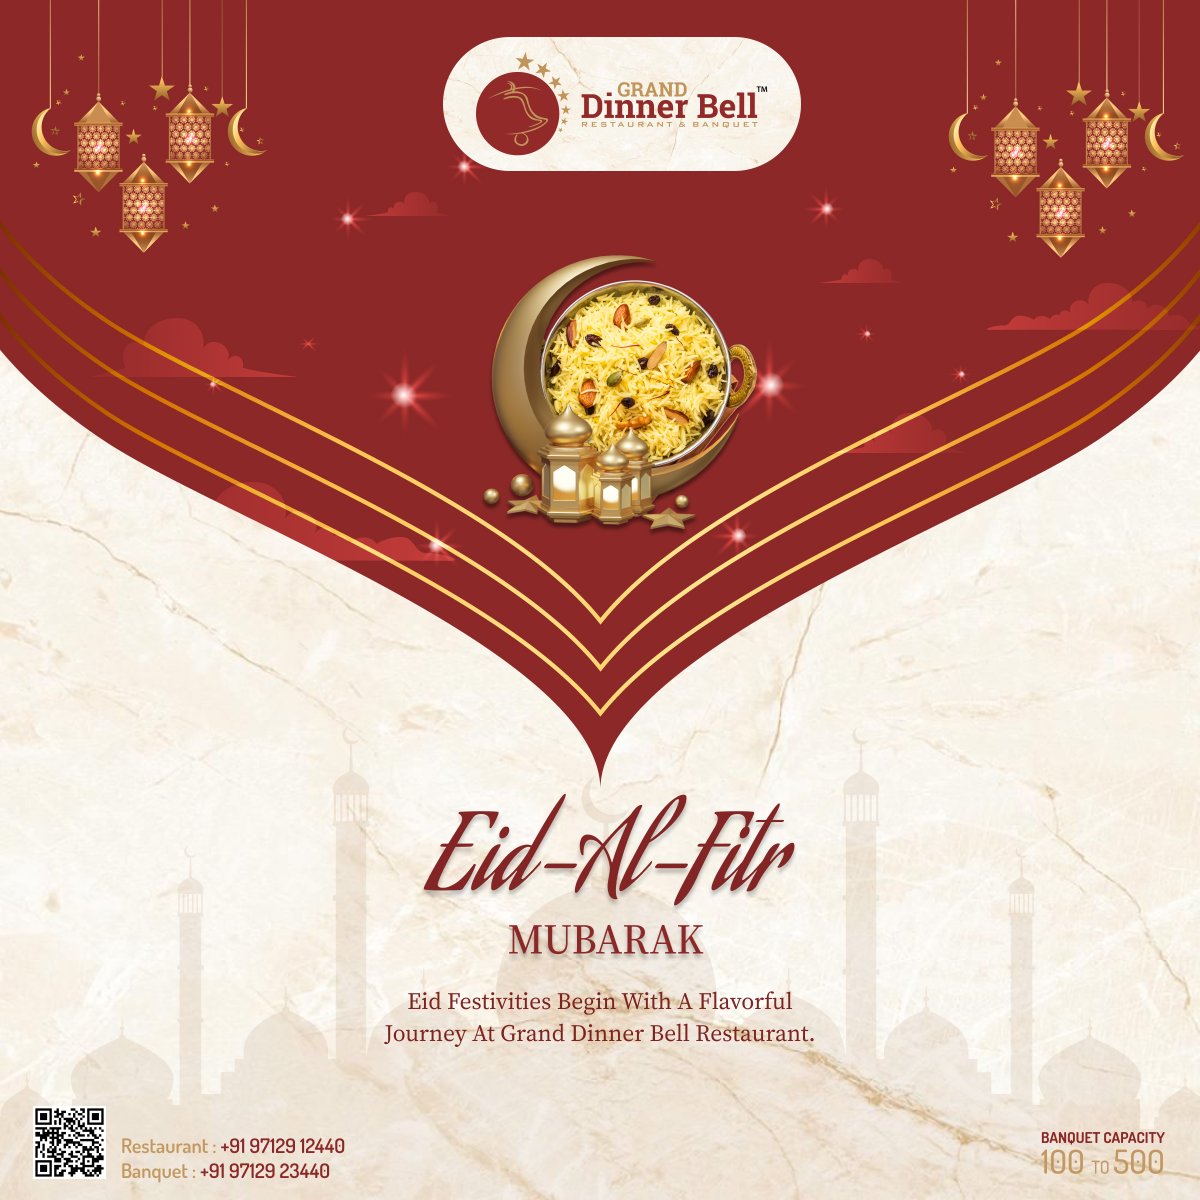 Eid-Al-Fitr Mubarak
Eid festivities begin with a flavorful journey at Grand Dinner Bell Restaurant.

#eidalfitr #eidmubarak2024 #eid #festivalvibes #celebration #eidoutfit #eidcollection #eidulfitr #happyeid #Granddinnerbell #Dinnerbell1 #Restaurant #Banquet #Memnagar  #Ahmedabad